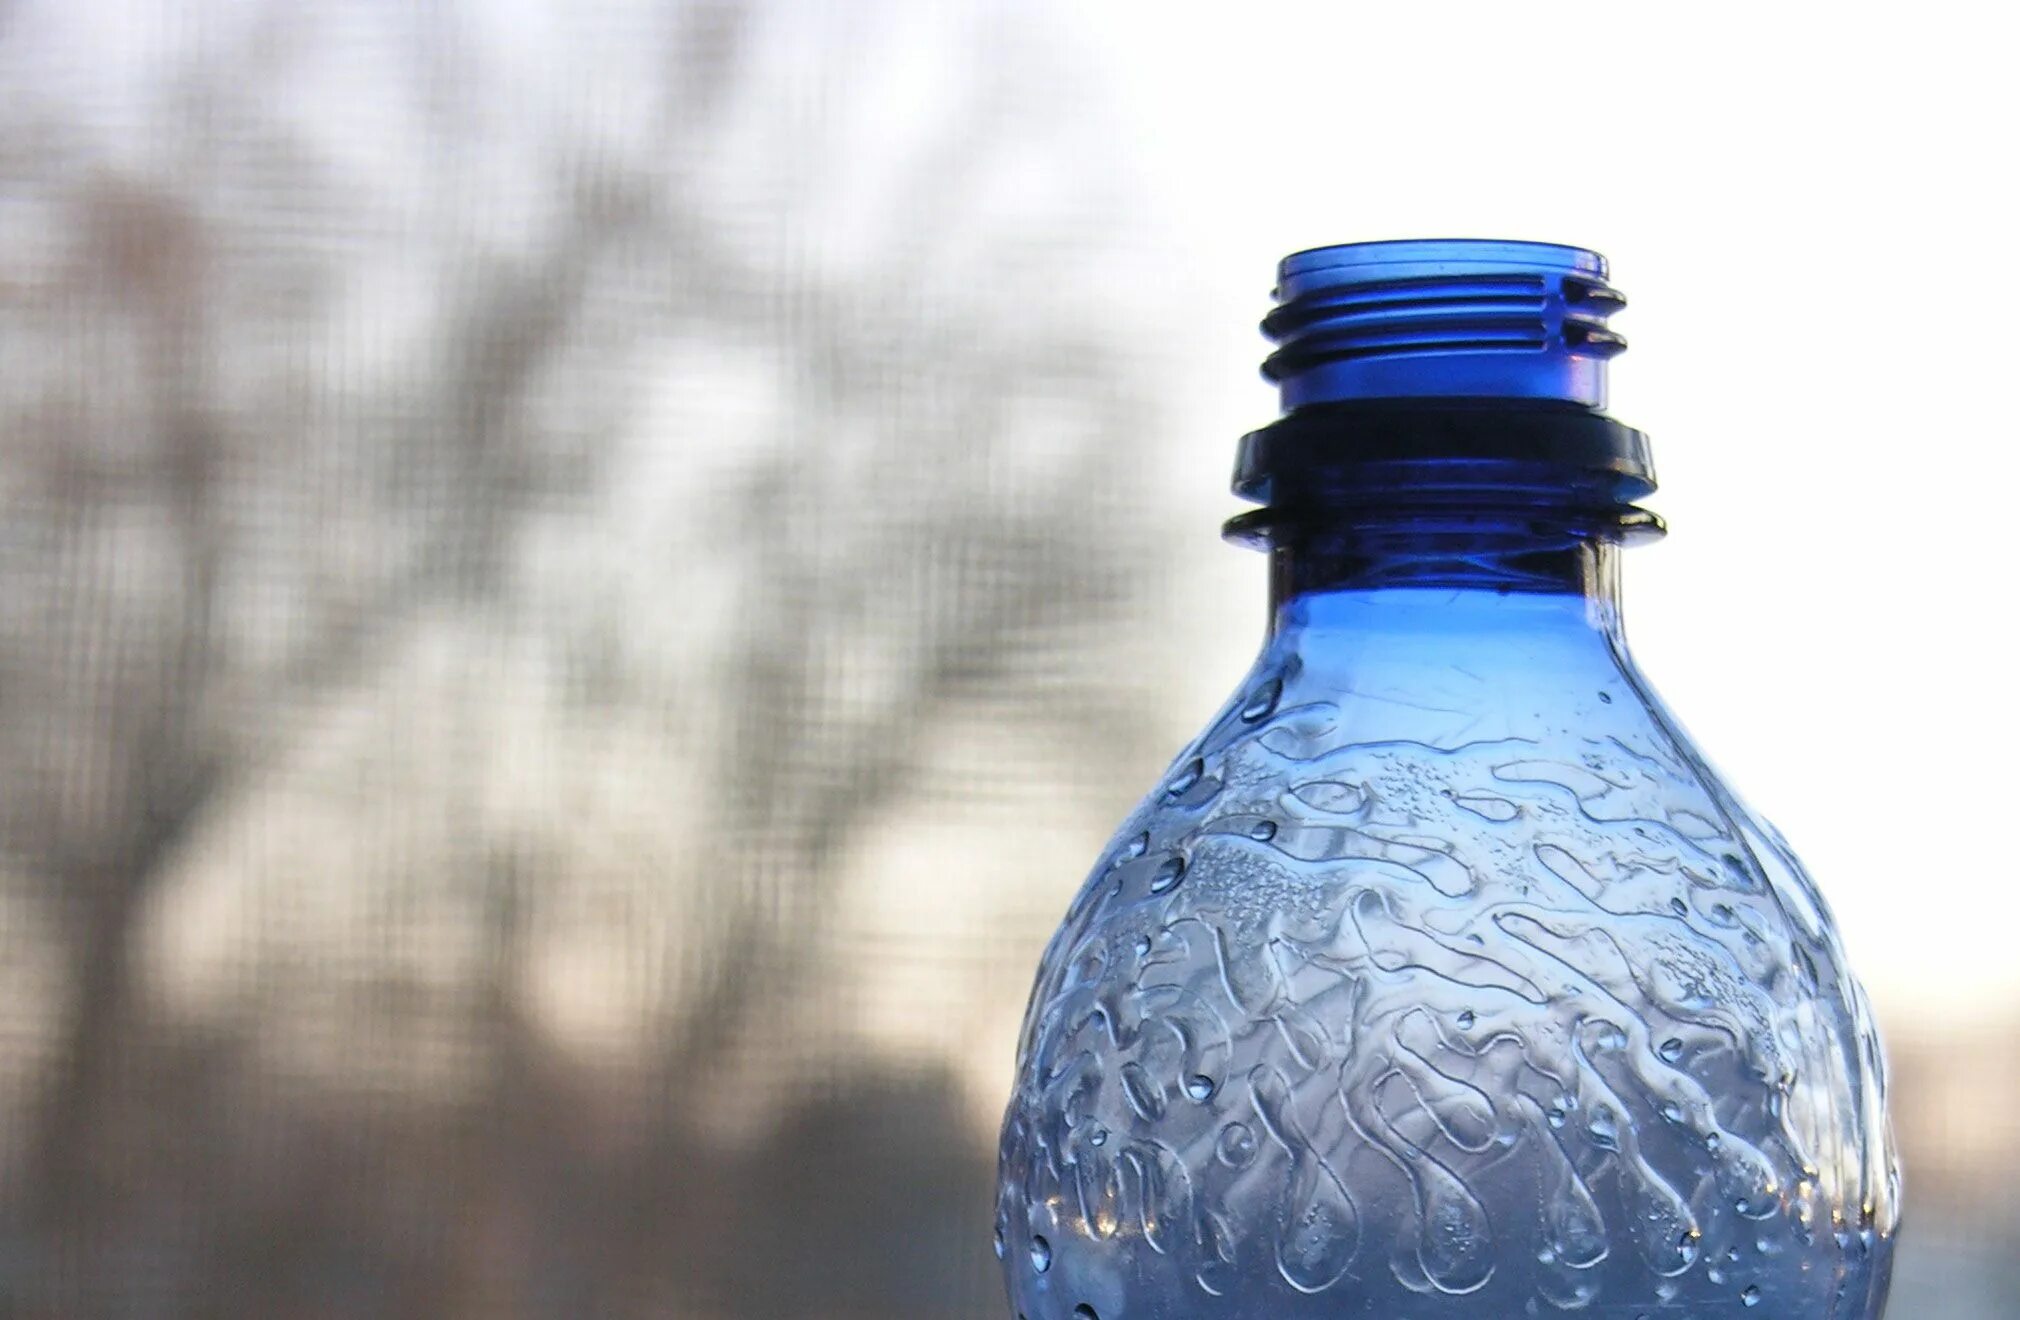 Бутылка для воды. Вода в бутылях. Открытая бутылка воды. Пластиковая бутылка для воды. Видео бутылка воды